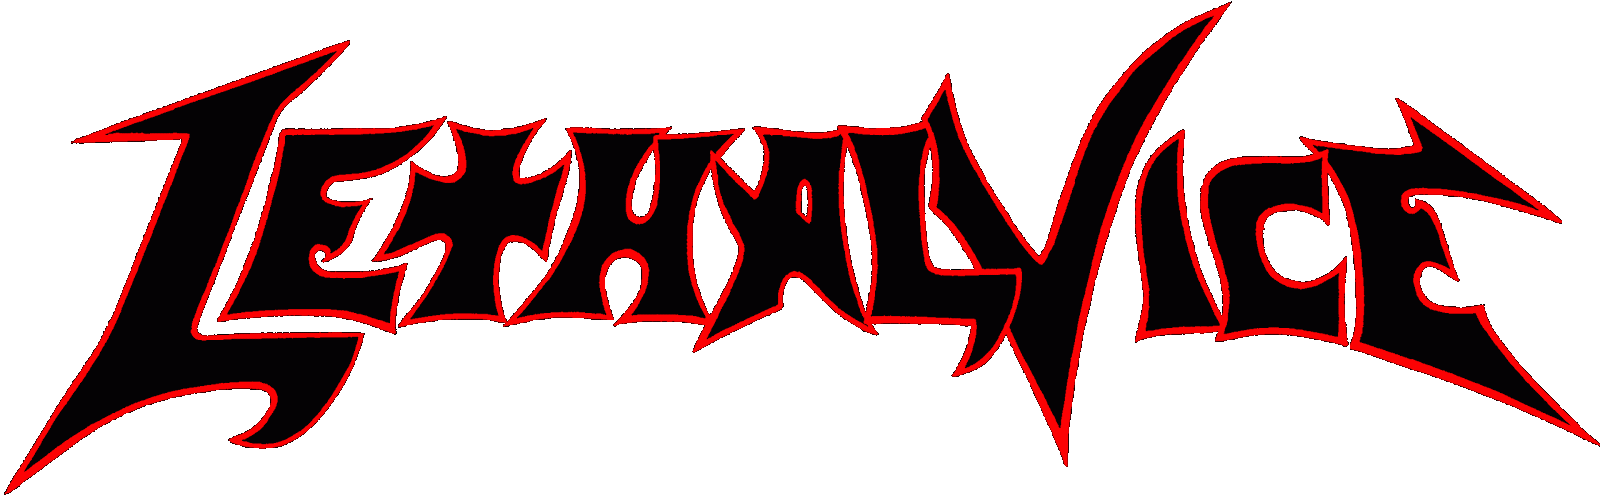 Lethal Vice logo